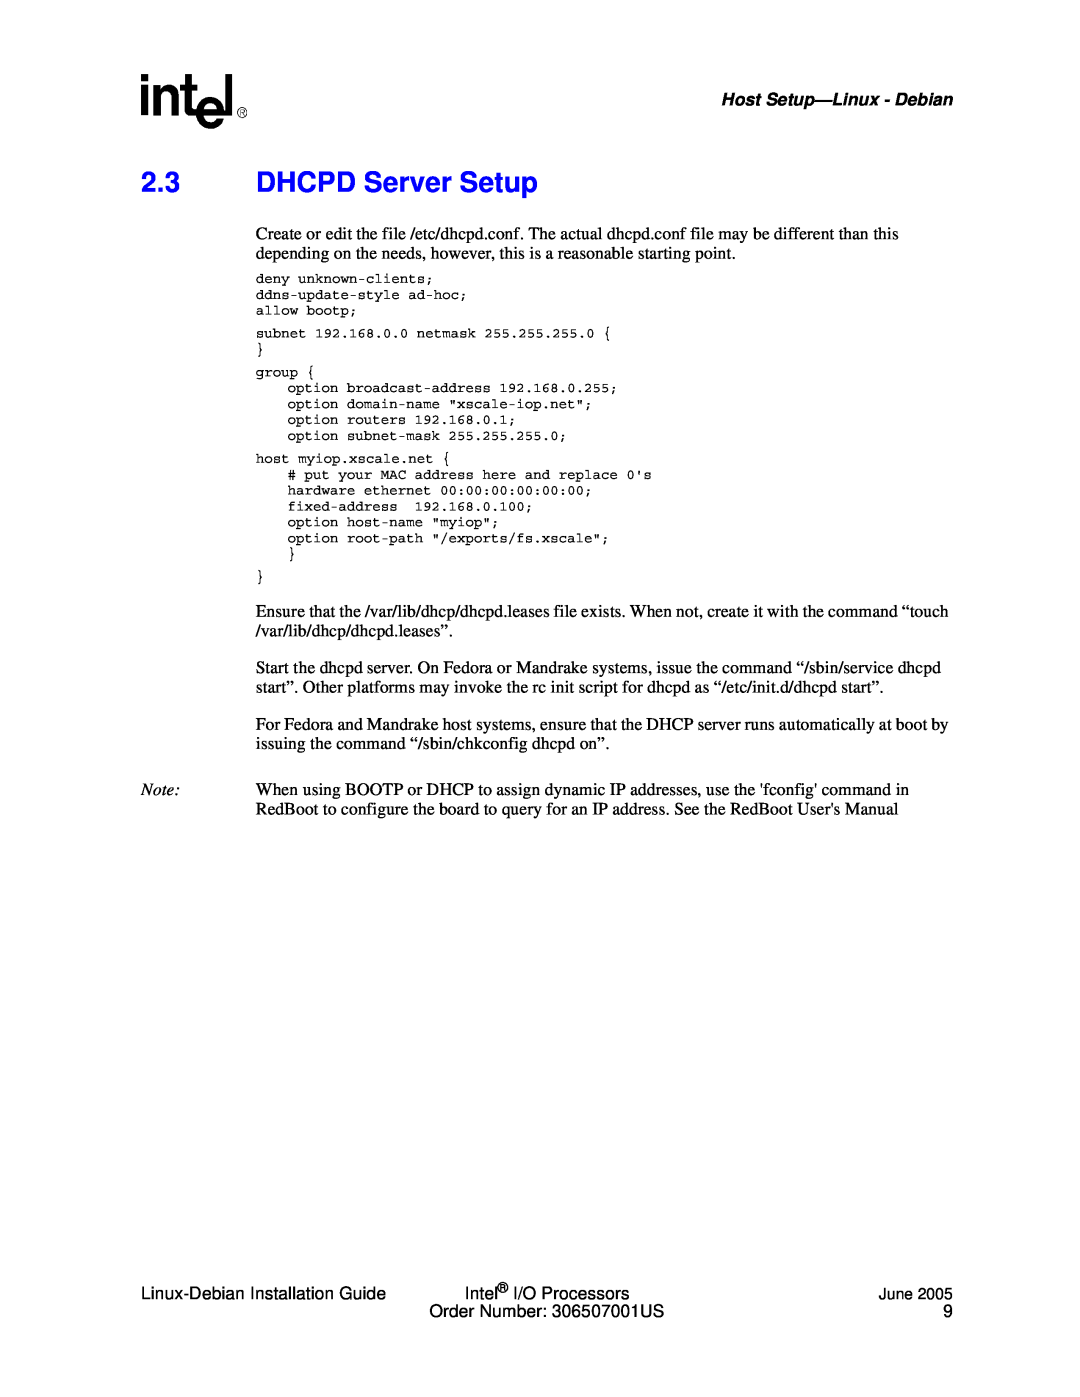 Intel I/O Processor manual 2.3DHCPD Server Setup, Host Setup—Linux- Debian, subnet 192.168.0.0 netmask, group 